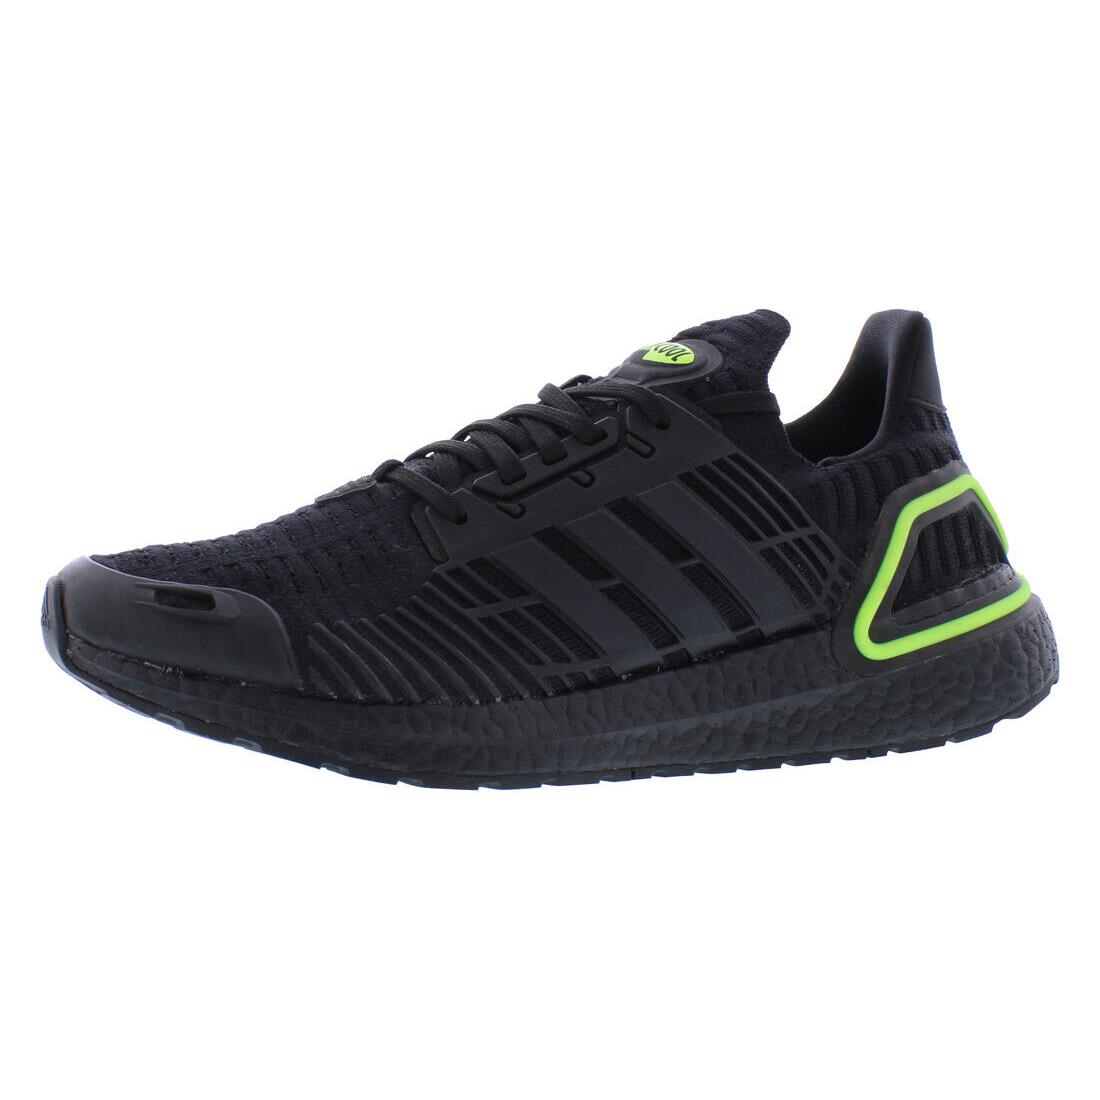 Adidas Ultraboost Cc_1 Dna Mens Shoes - Black, Main: Black